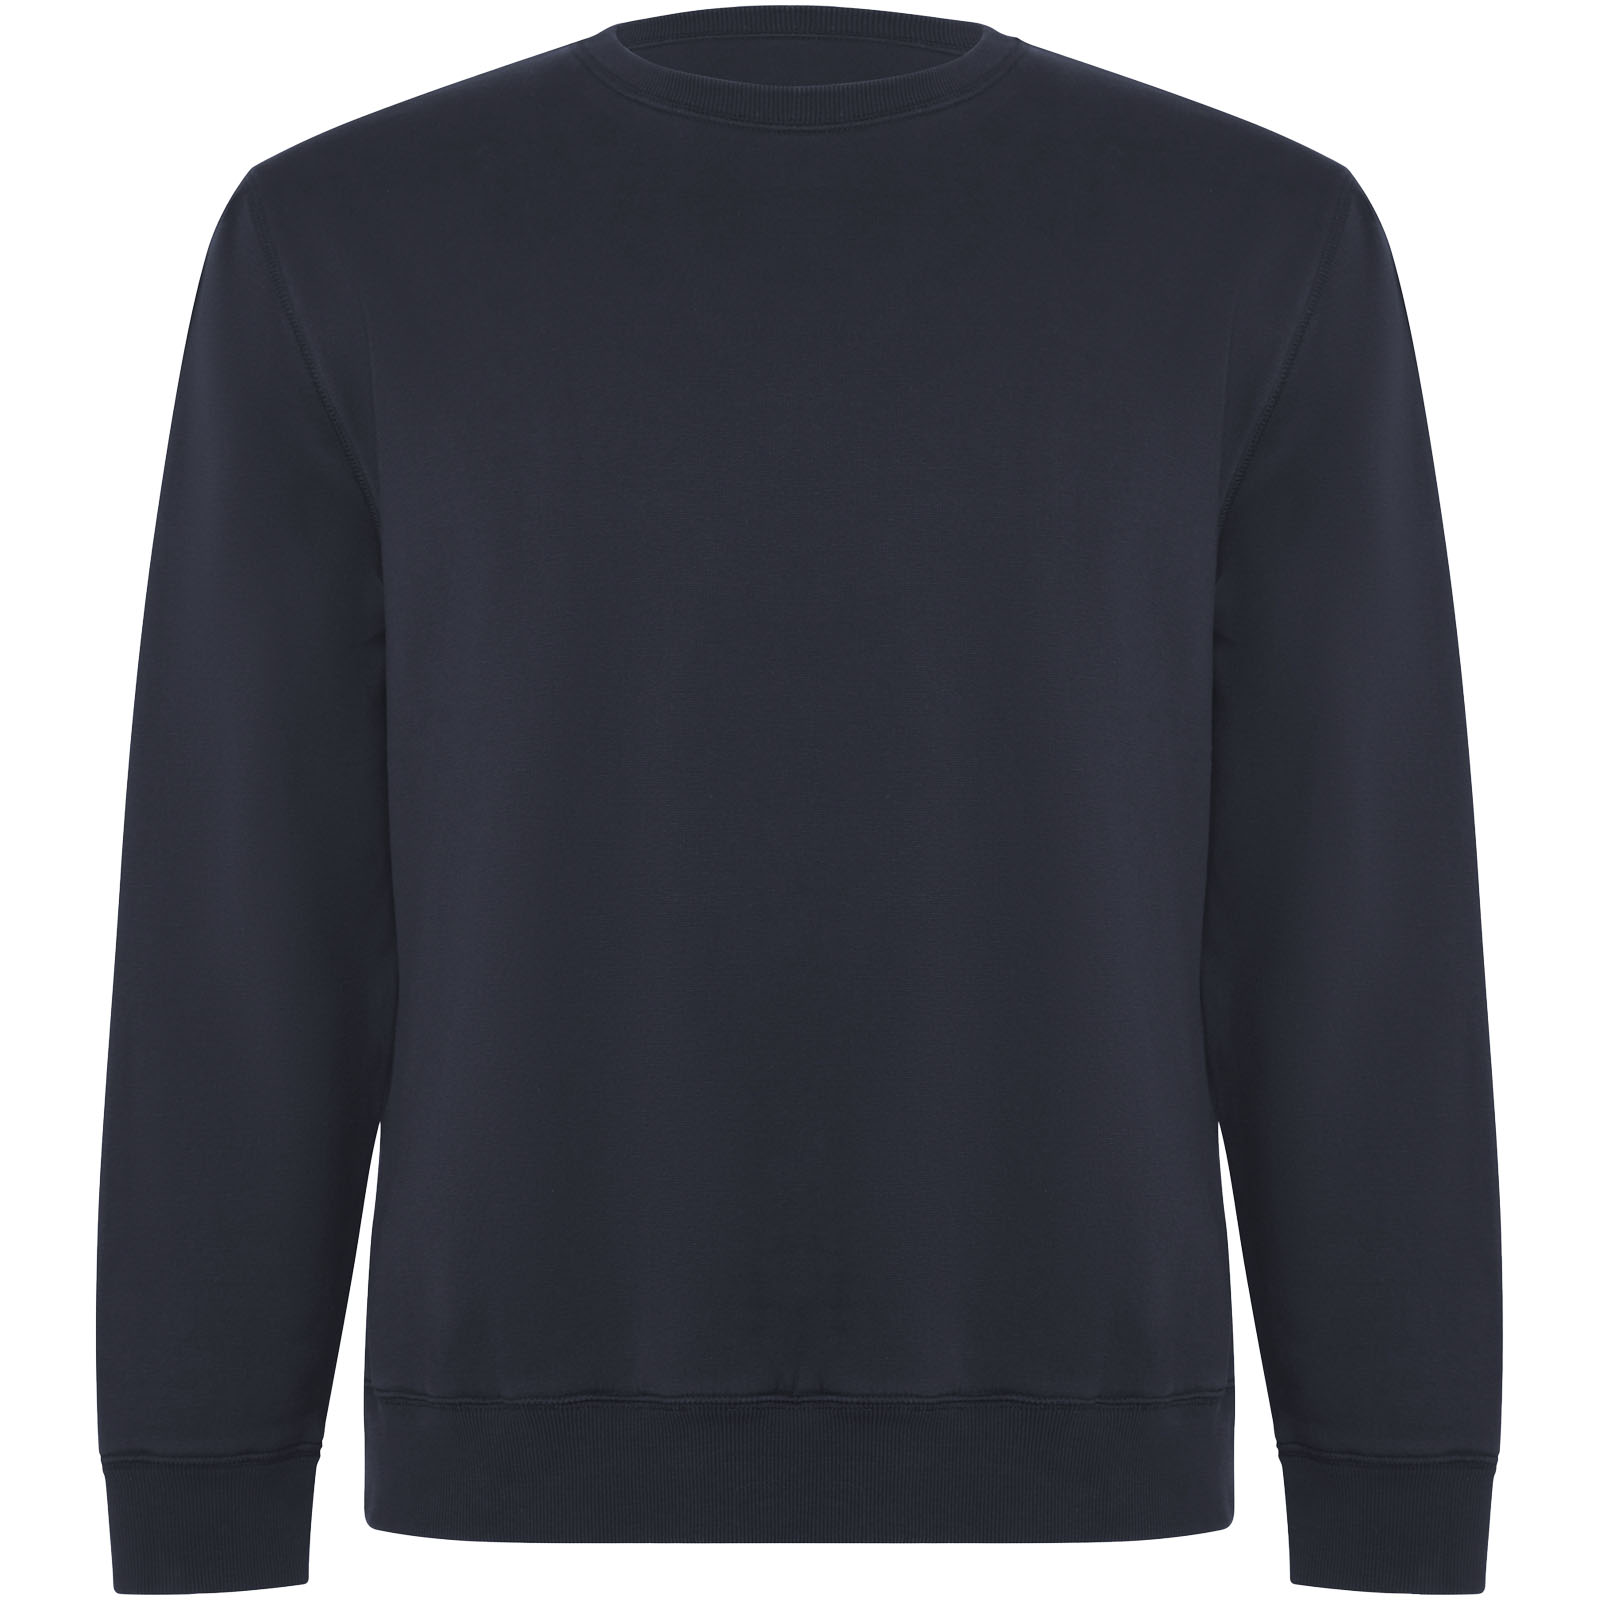 Clothing - Batian unisex crewneck sweater